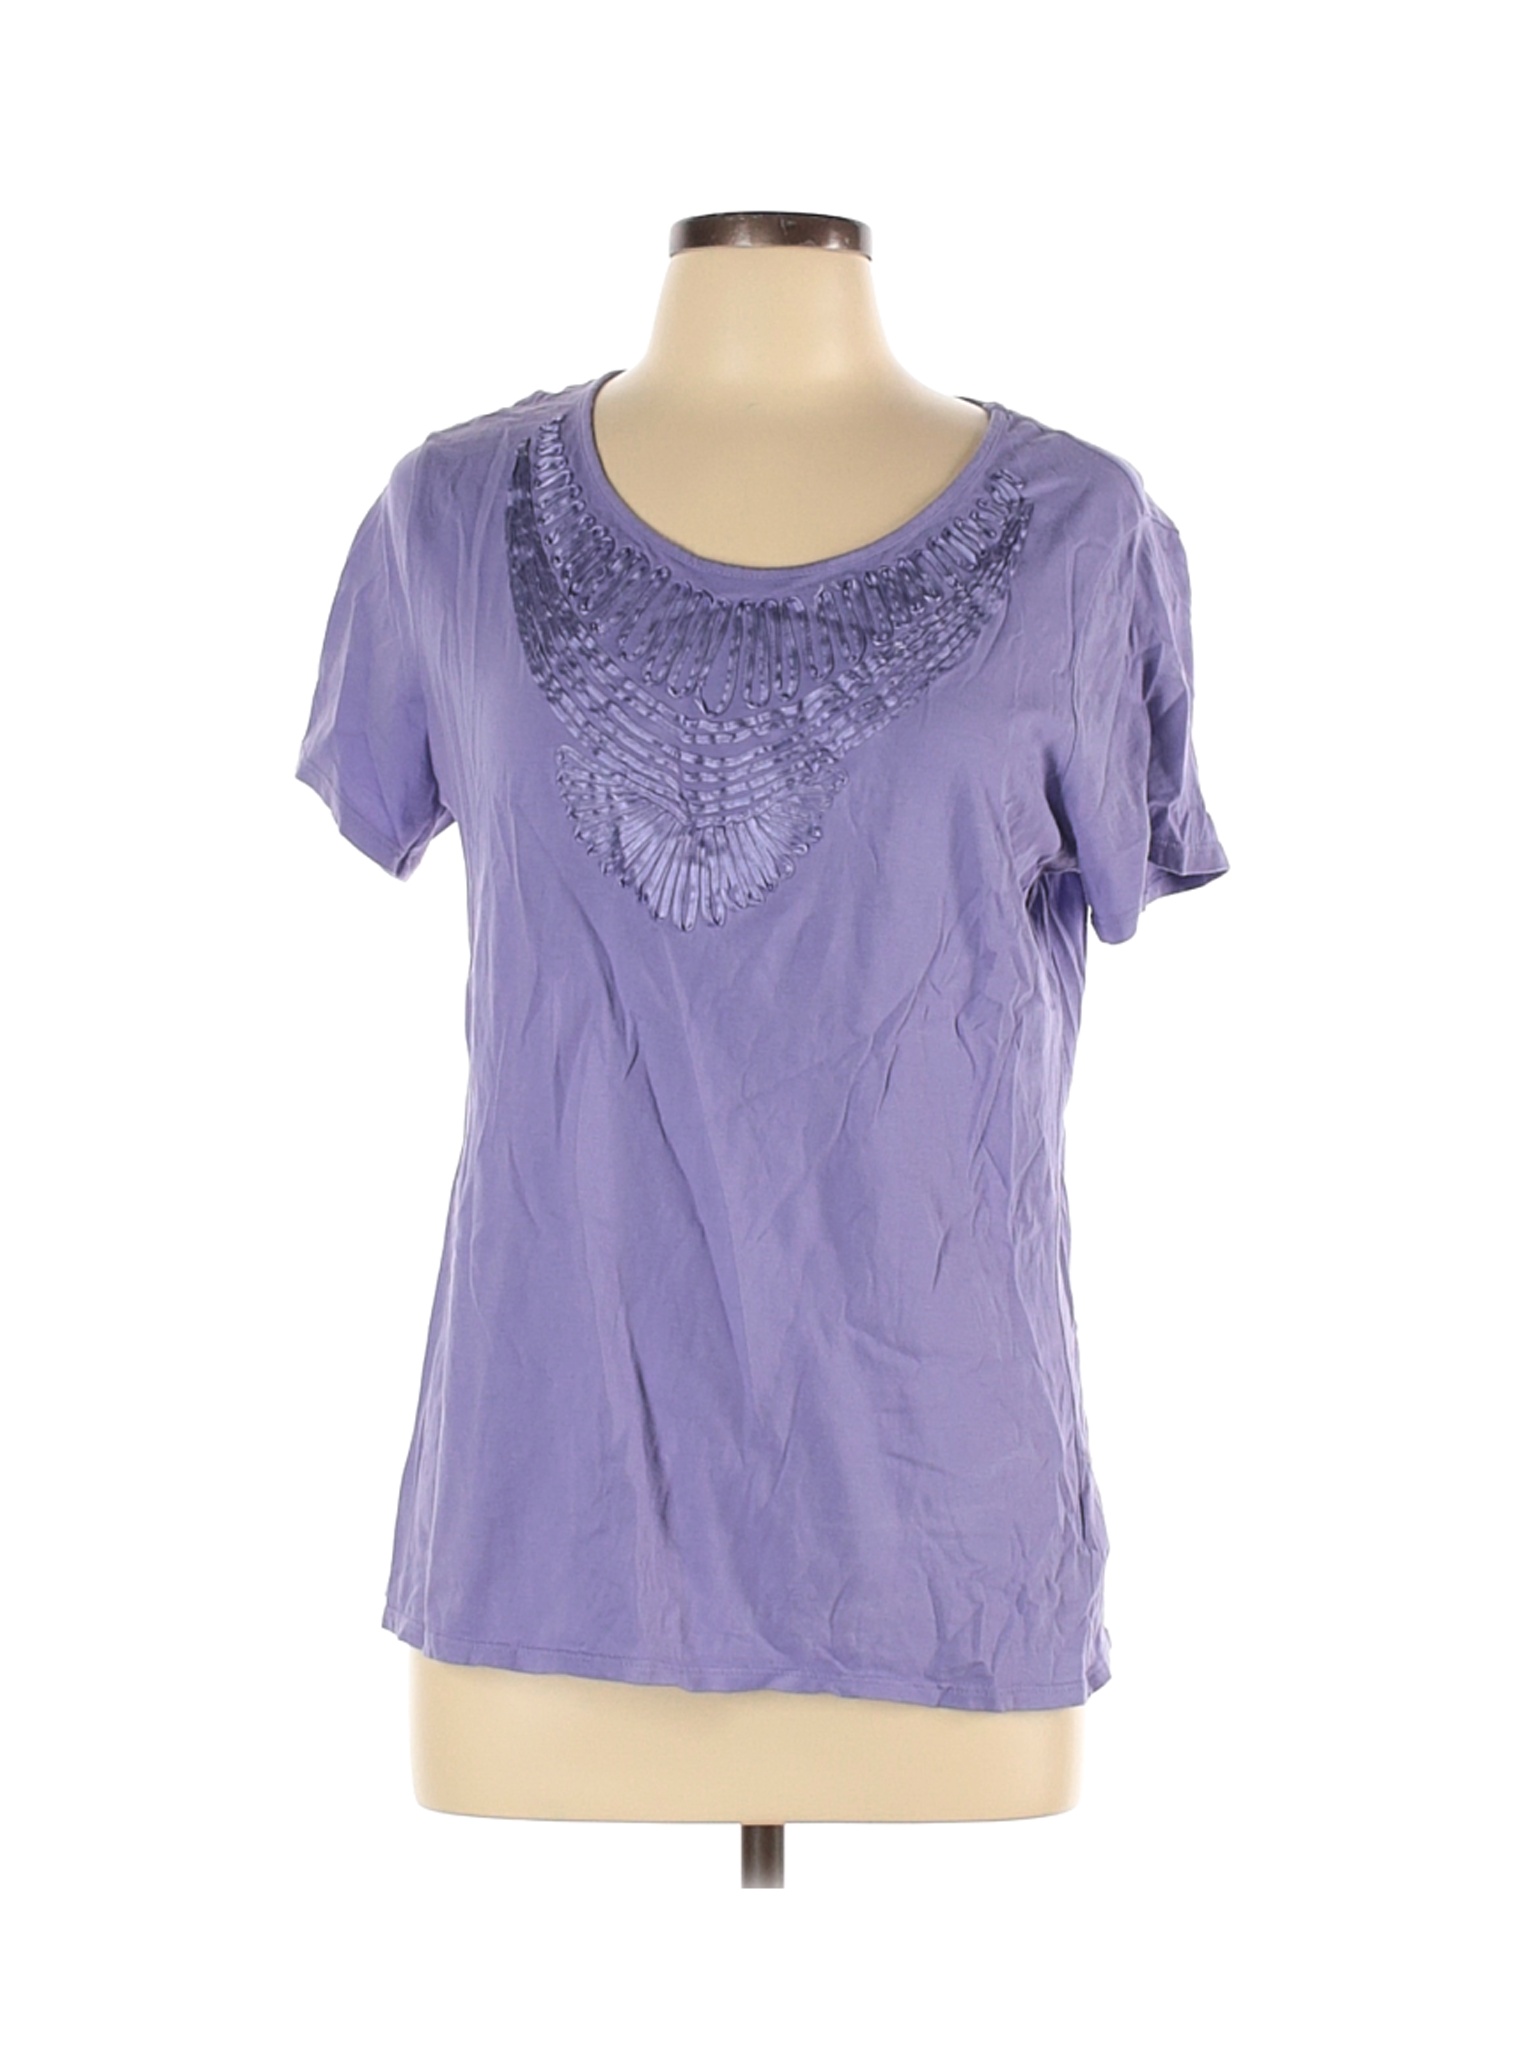 Coldwater Creek Women Purple Short Sleeve T-Shirt L | eBay